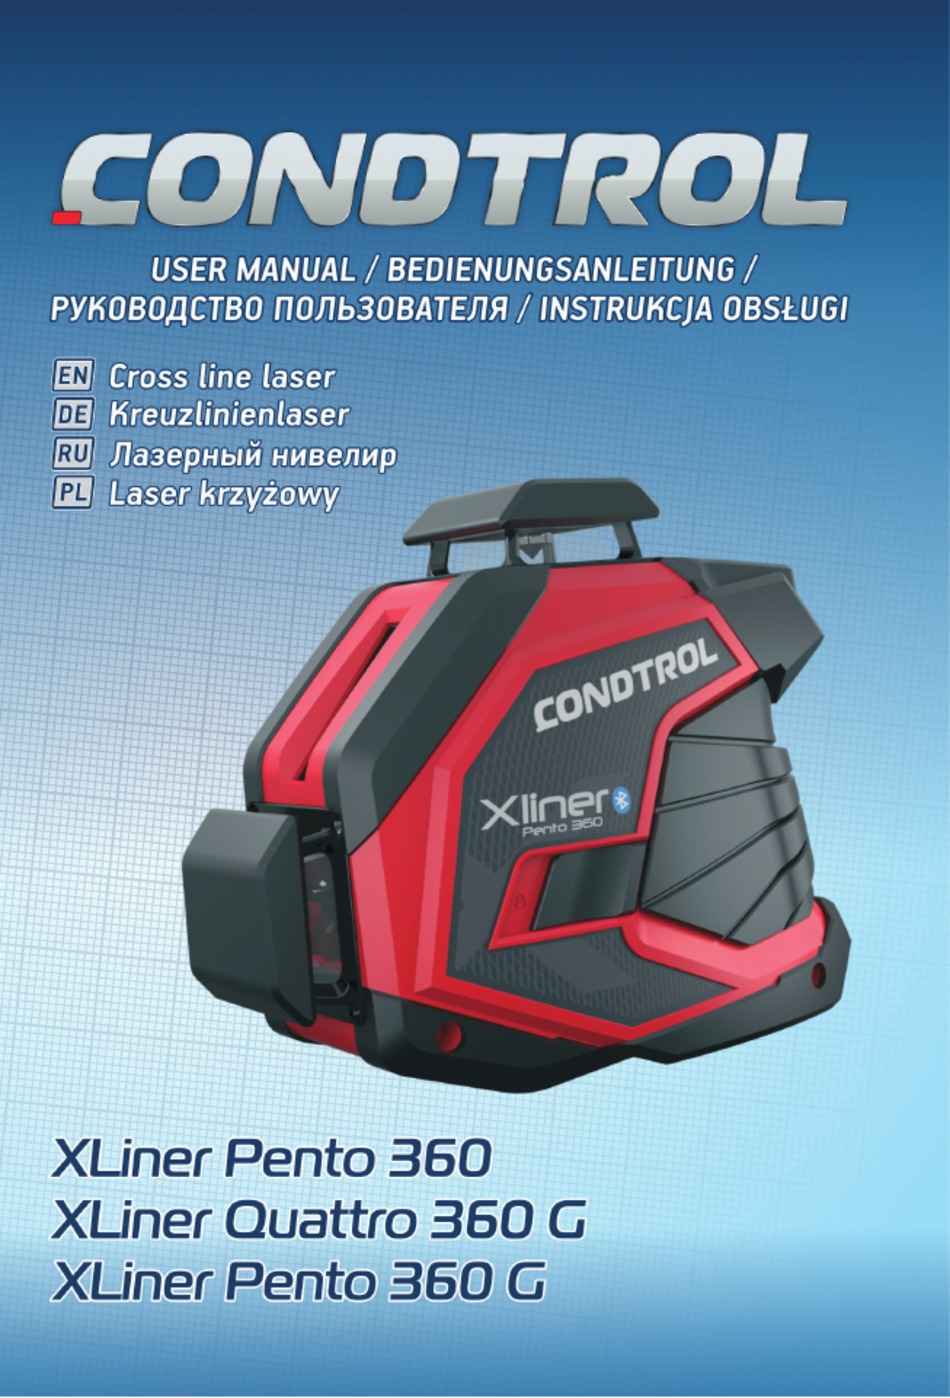 CONDTROL XLINER PENTO 360 USER MANUAL Pdf Download | ManualsLib